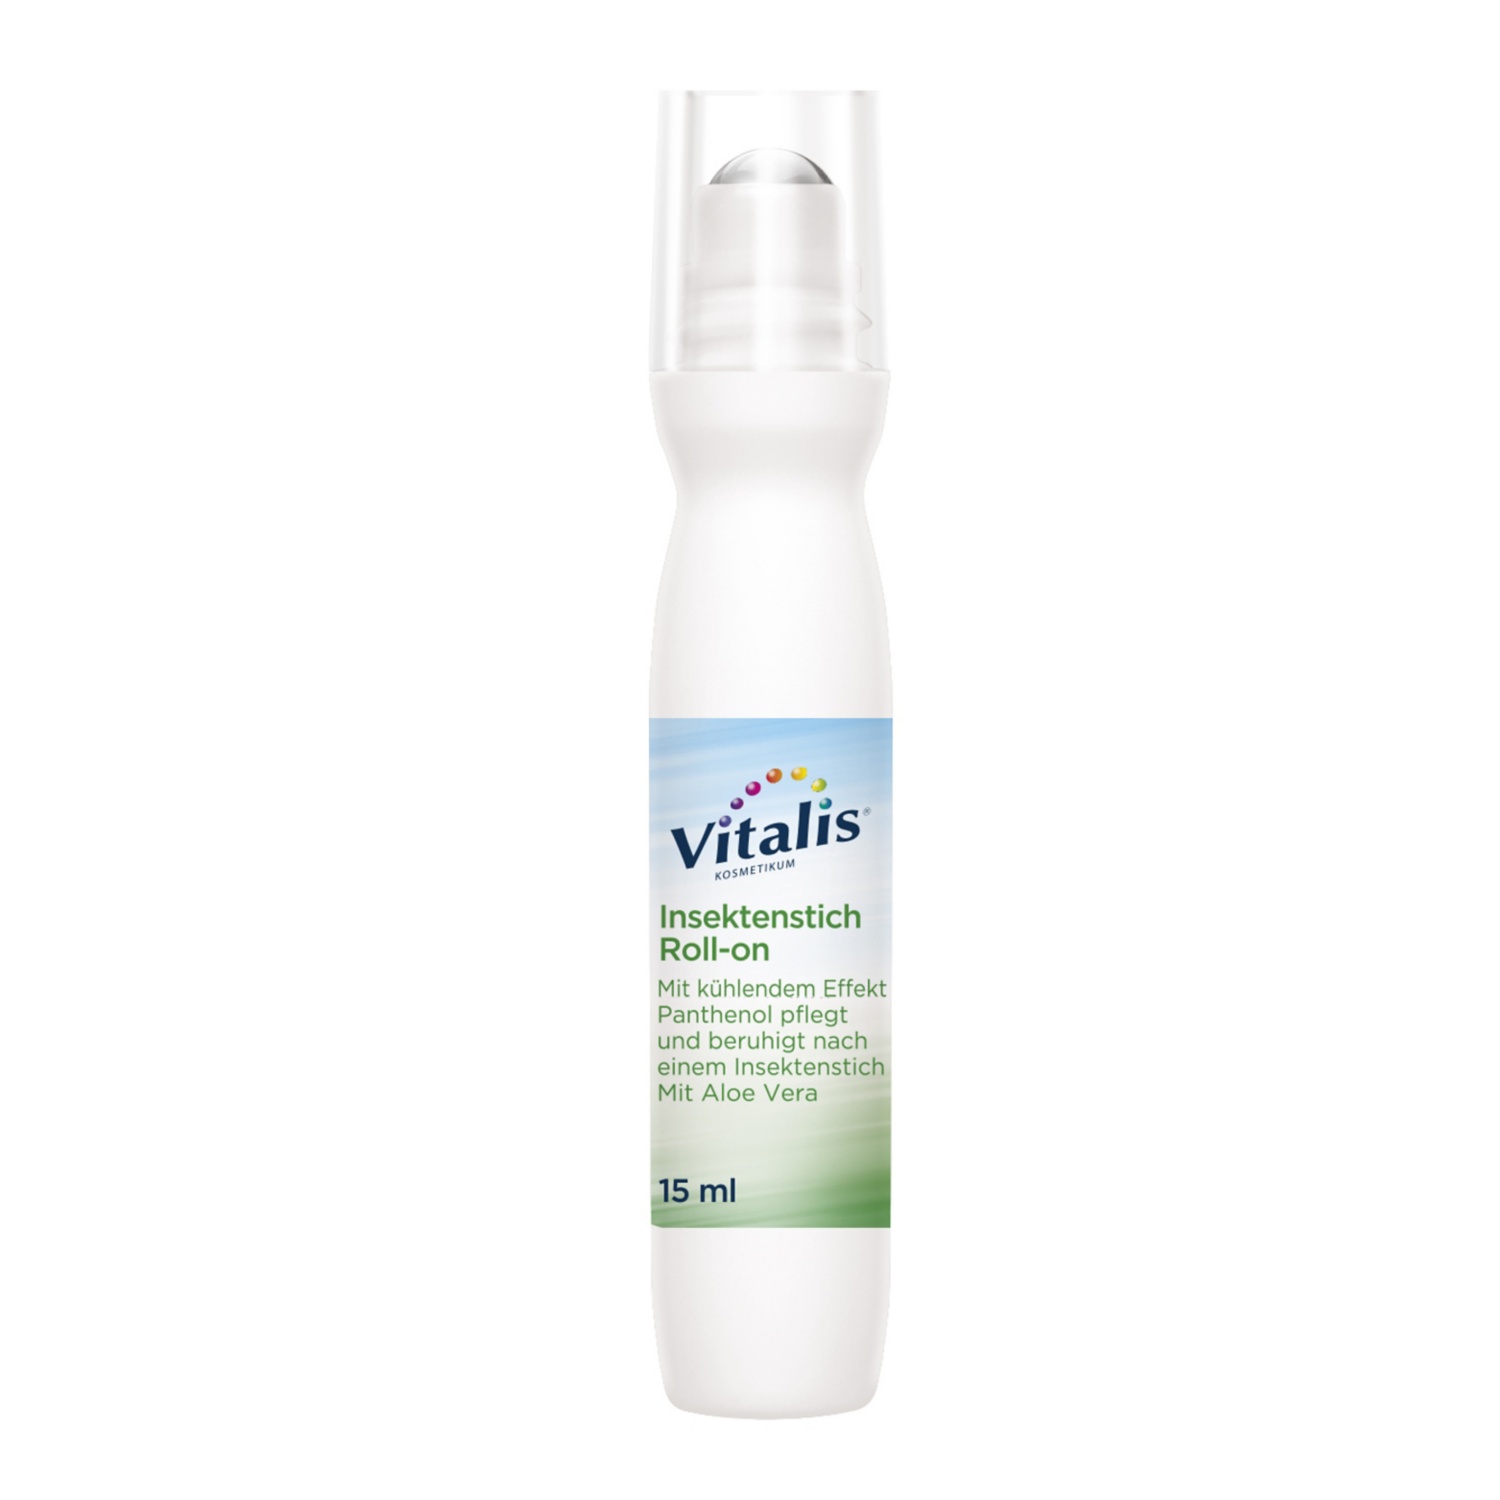 Vitalis® Insektenstich Roll-on 15 ml